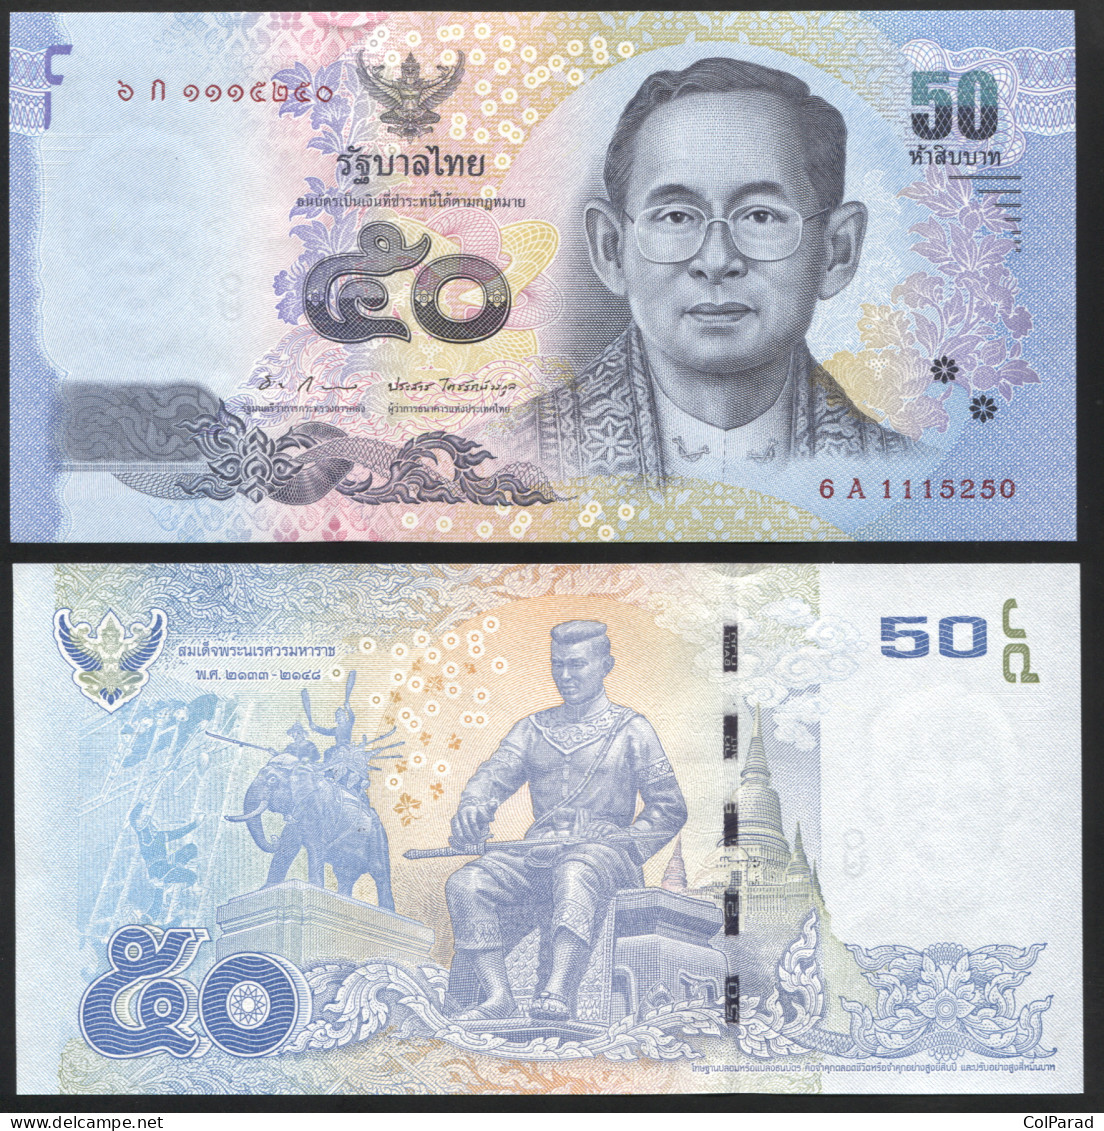 THAILAND 50 BAHT - ND (2012) - Unc - P.119 Paper Banknote - Thailand